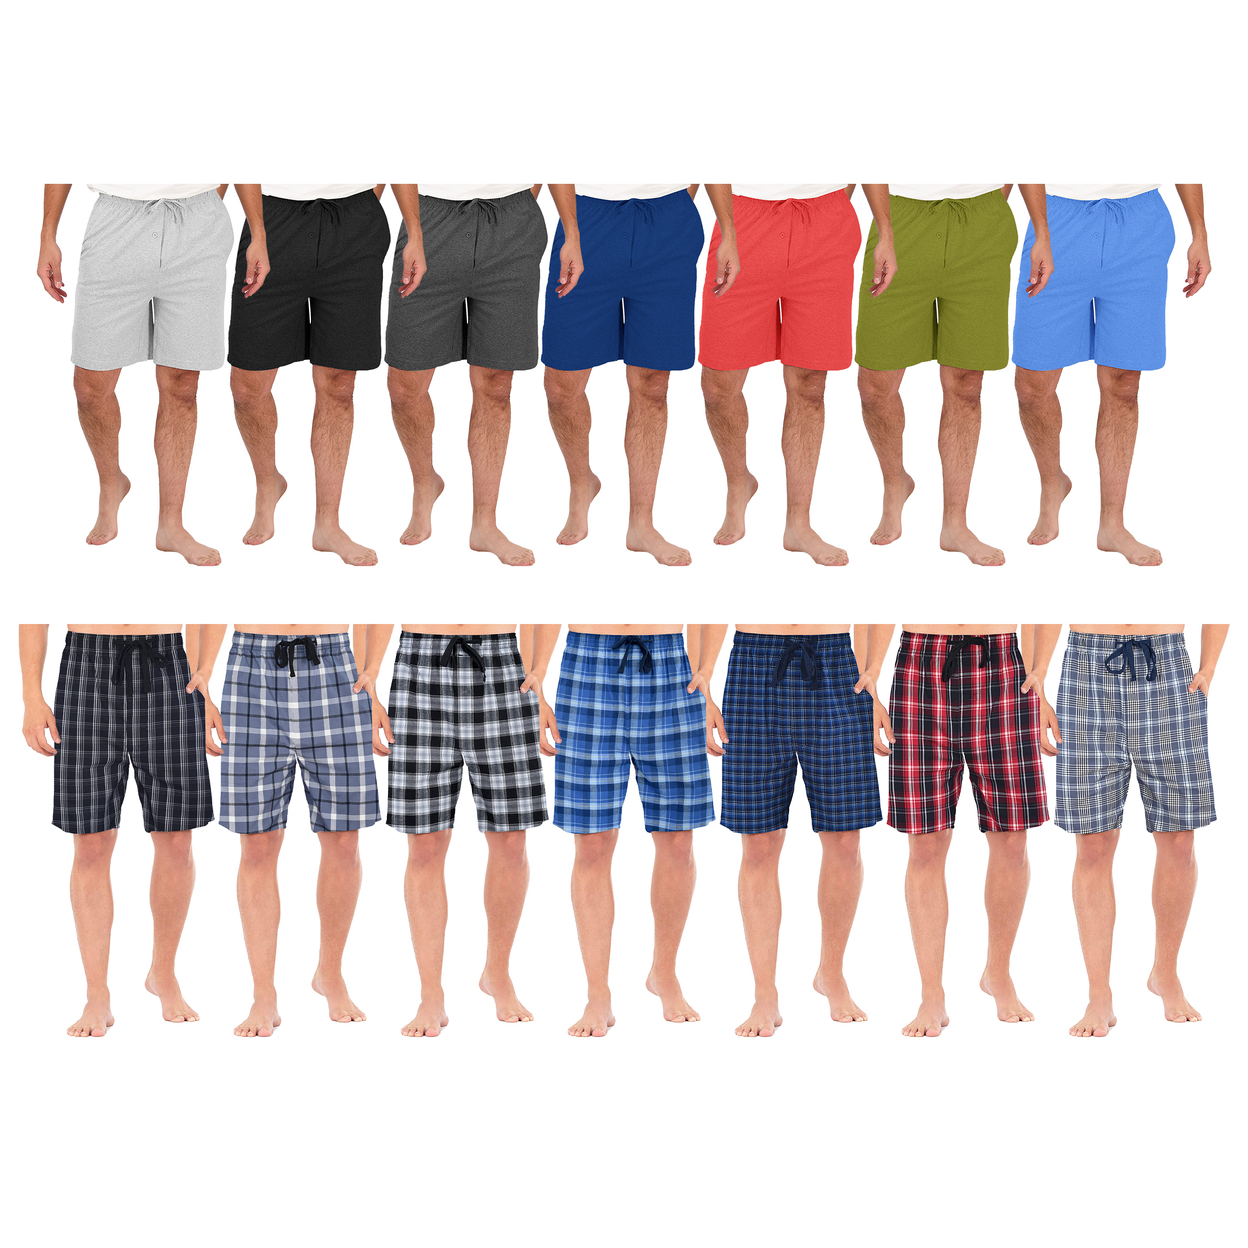 Multi-Pack: Men's Ultra Soft Knit Lounge Pajama Sleep Shorts - Plaid, 1-pack, Medium